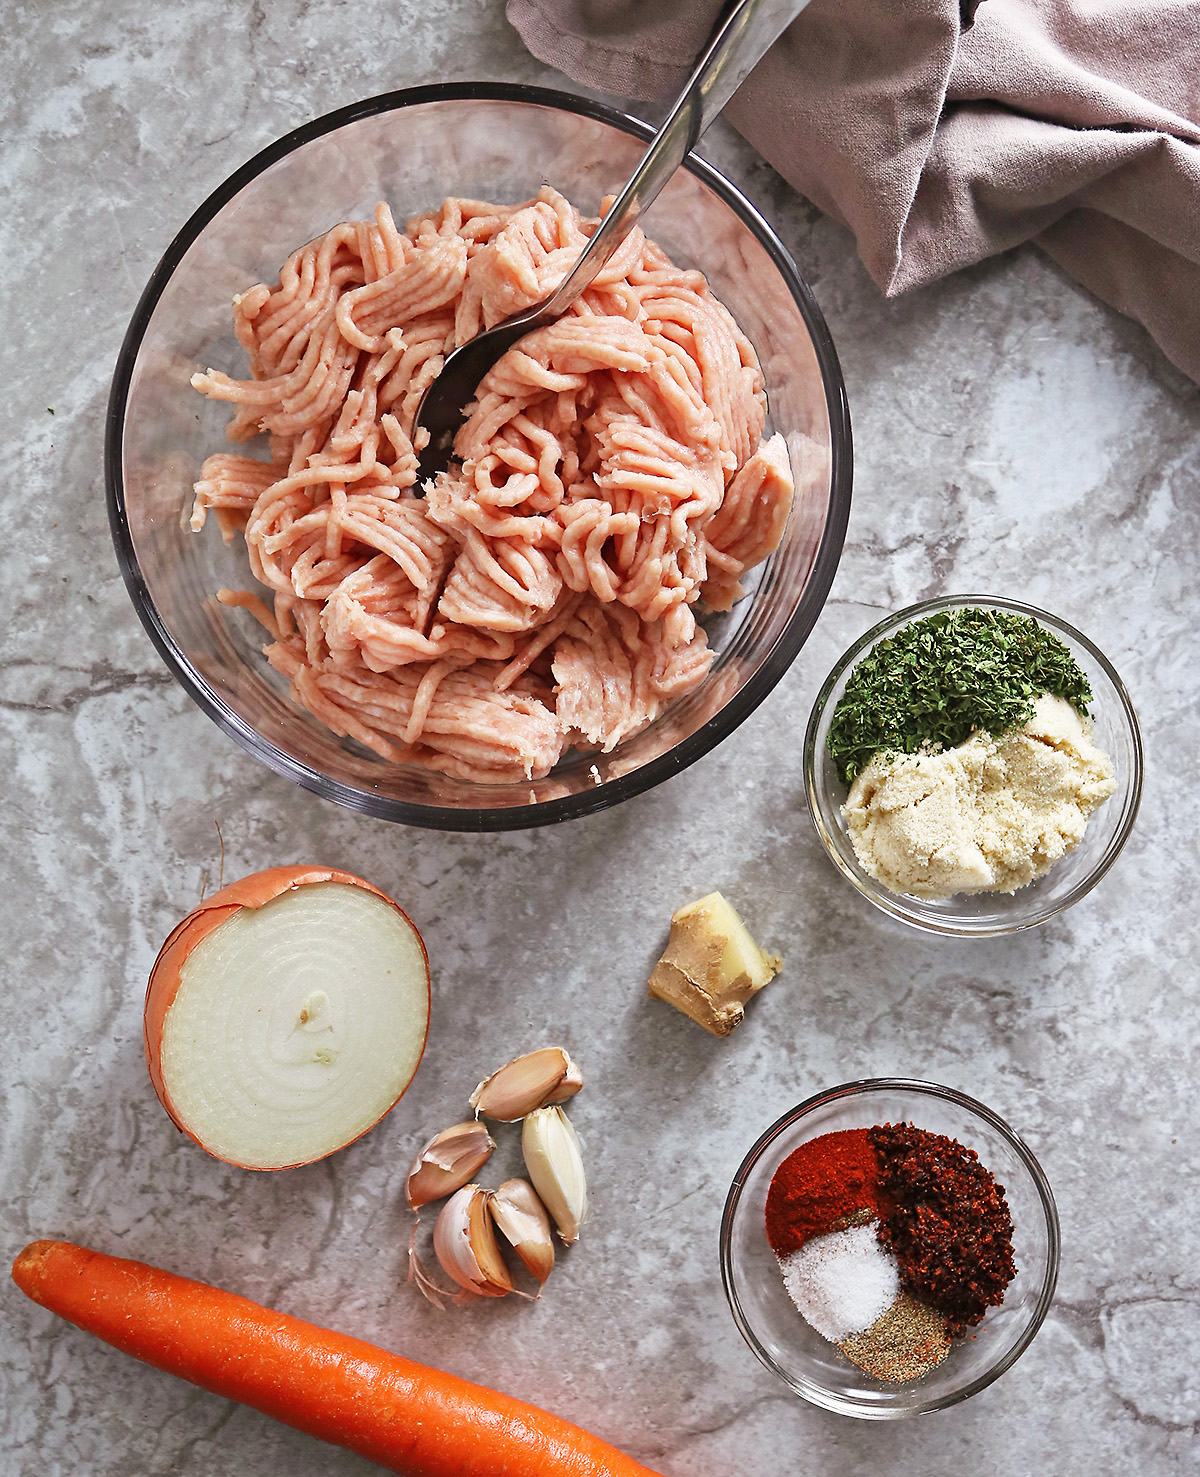 Ingredients to make carrot chicken meatballs